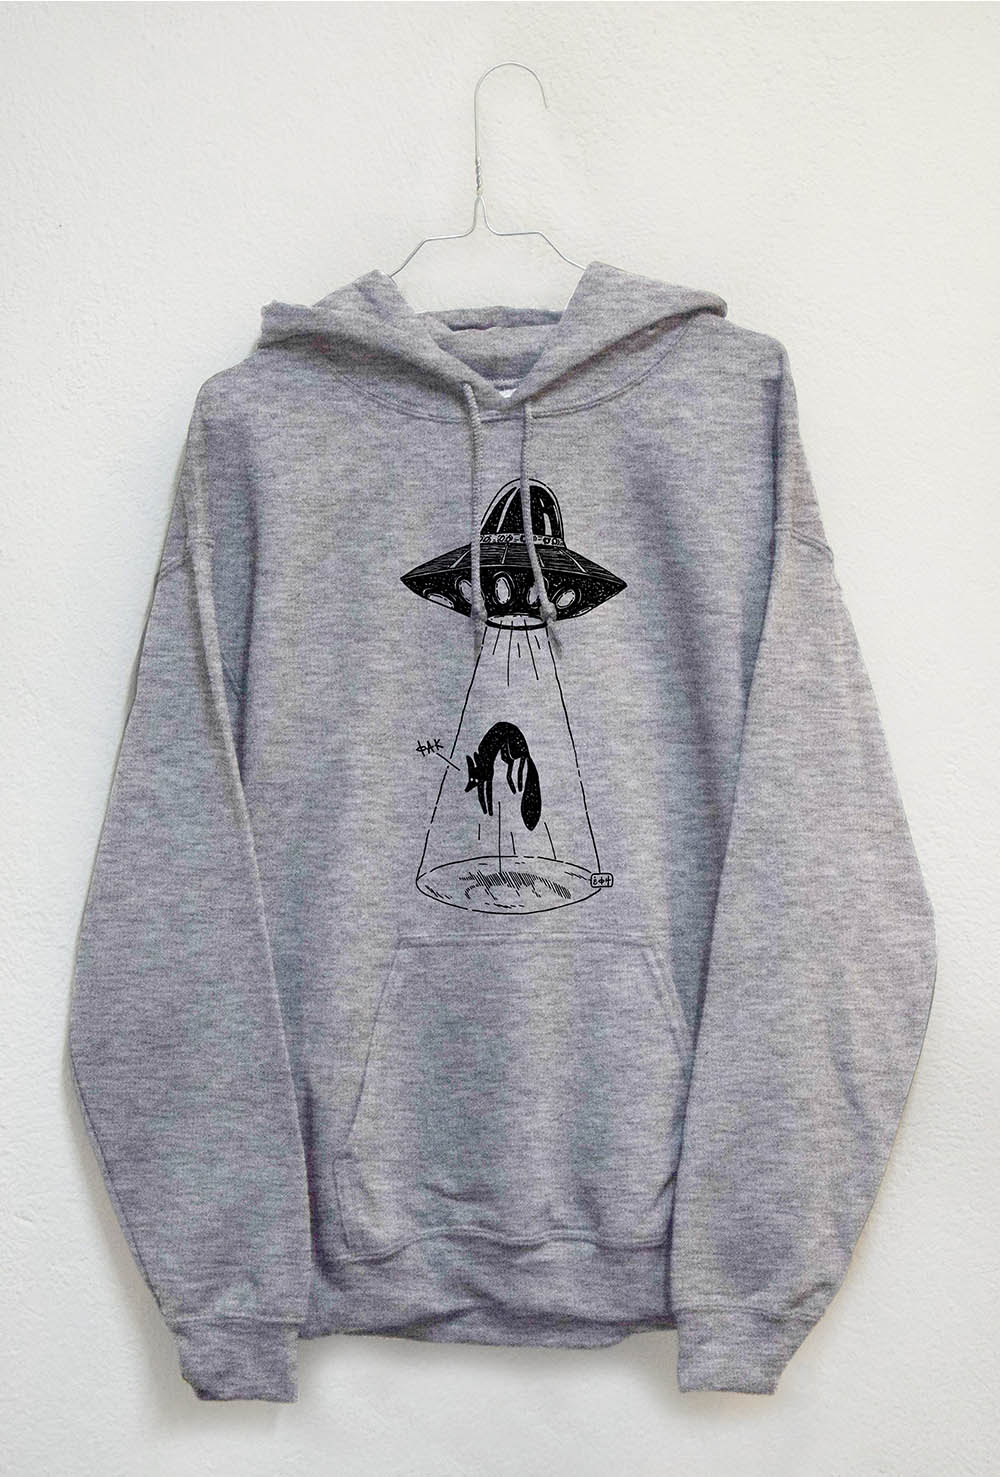 Subworks Grey hoodie alien ufo abduction fox